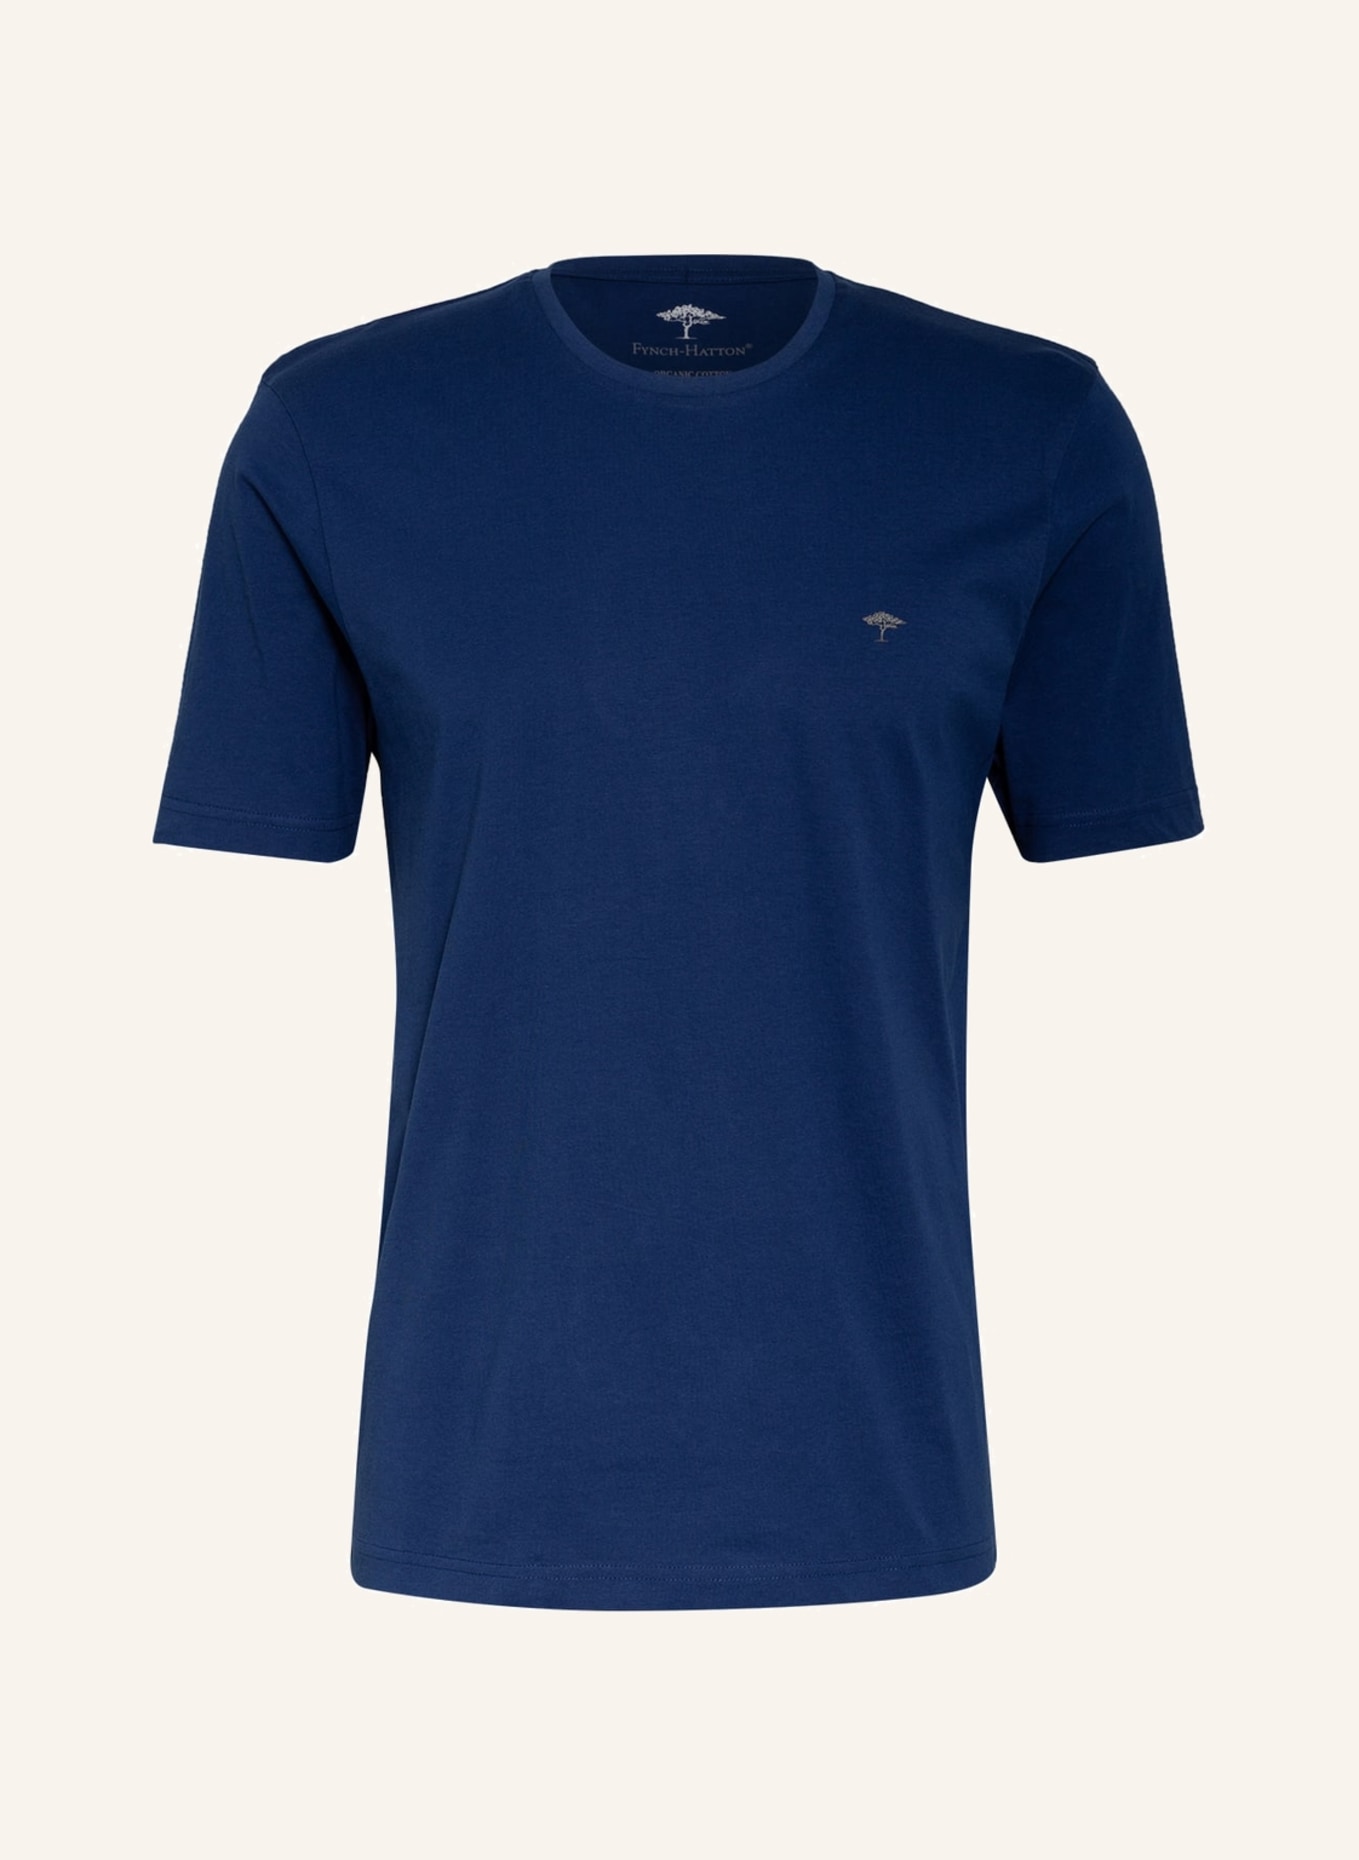 FYNCH-HATTON T-Shirt, Farbe: DUNKELBLAU (Bild 1)